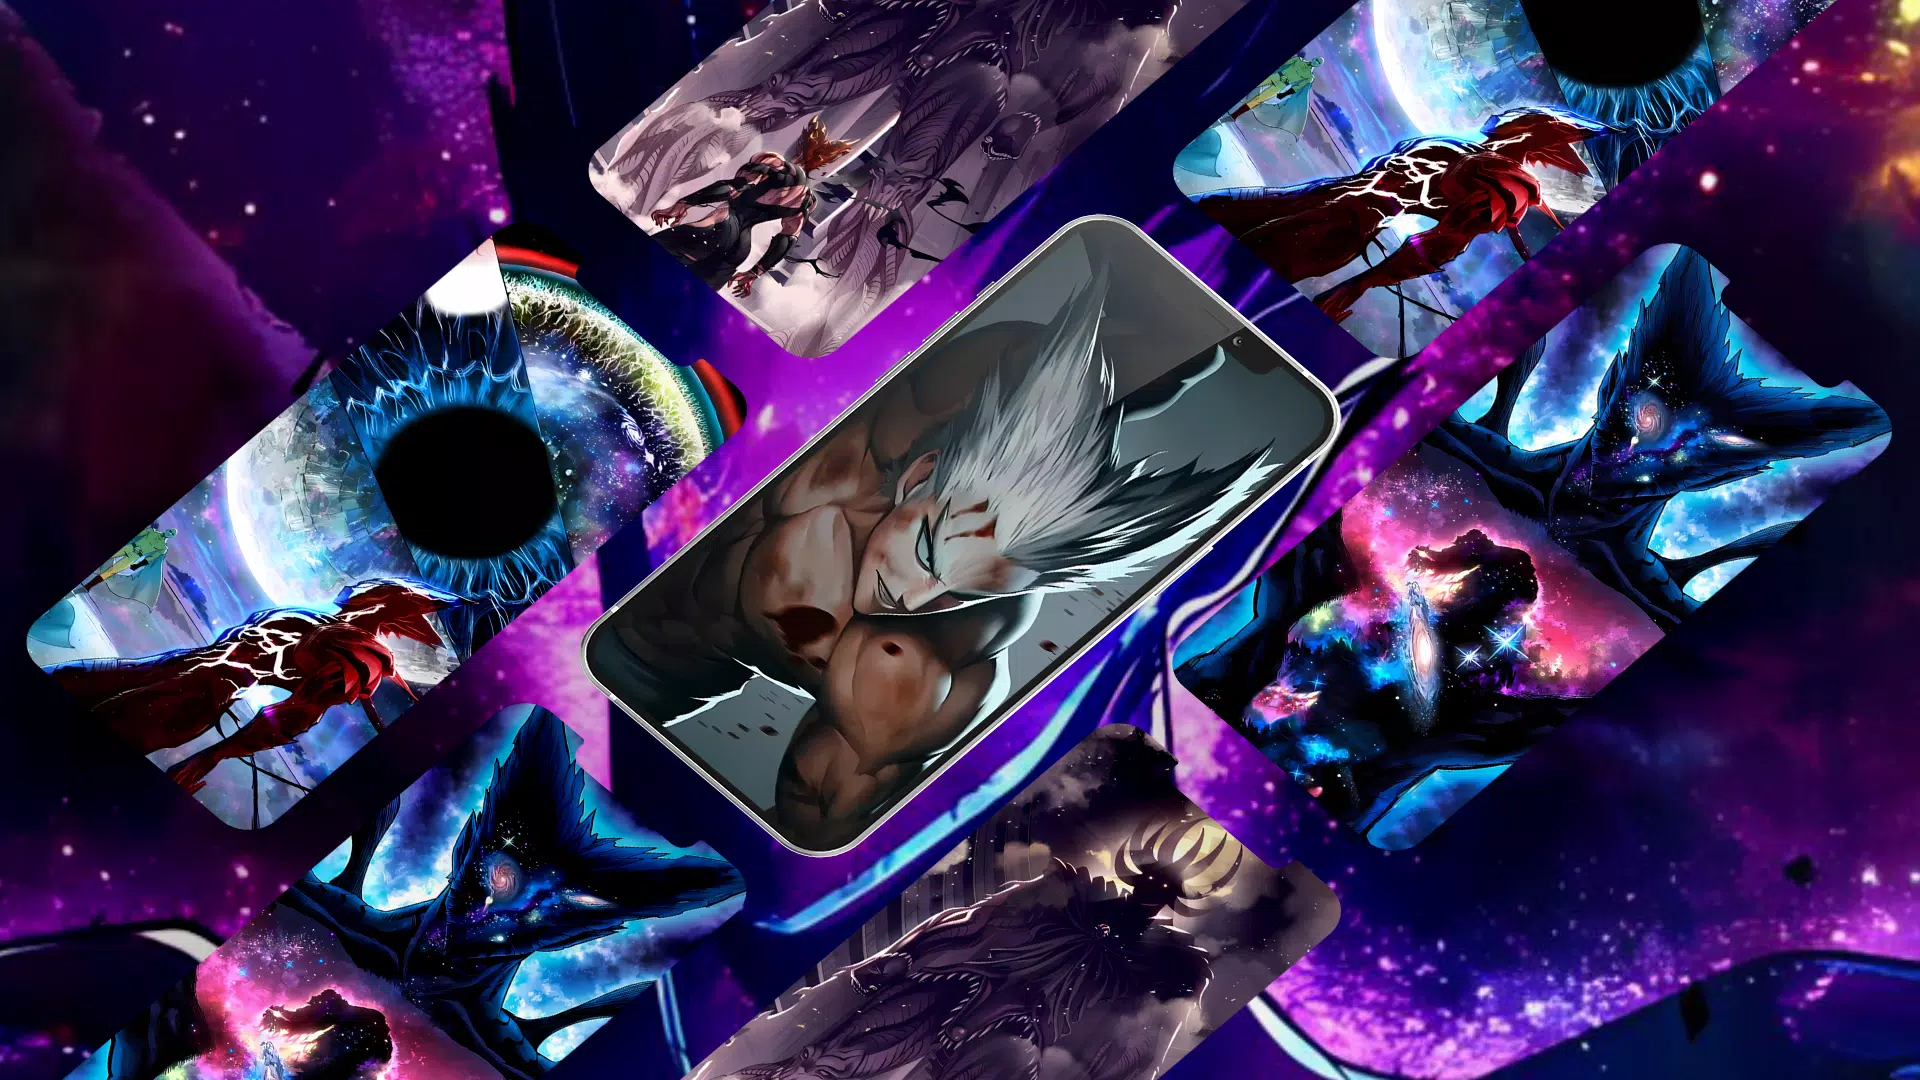 Garou Cosmic Fear Wallpaper APK for Android Download